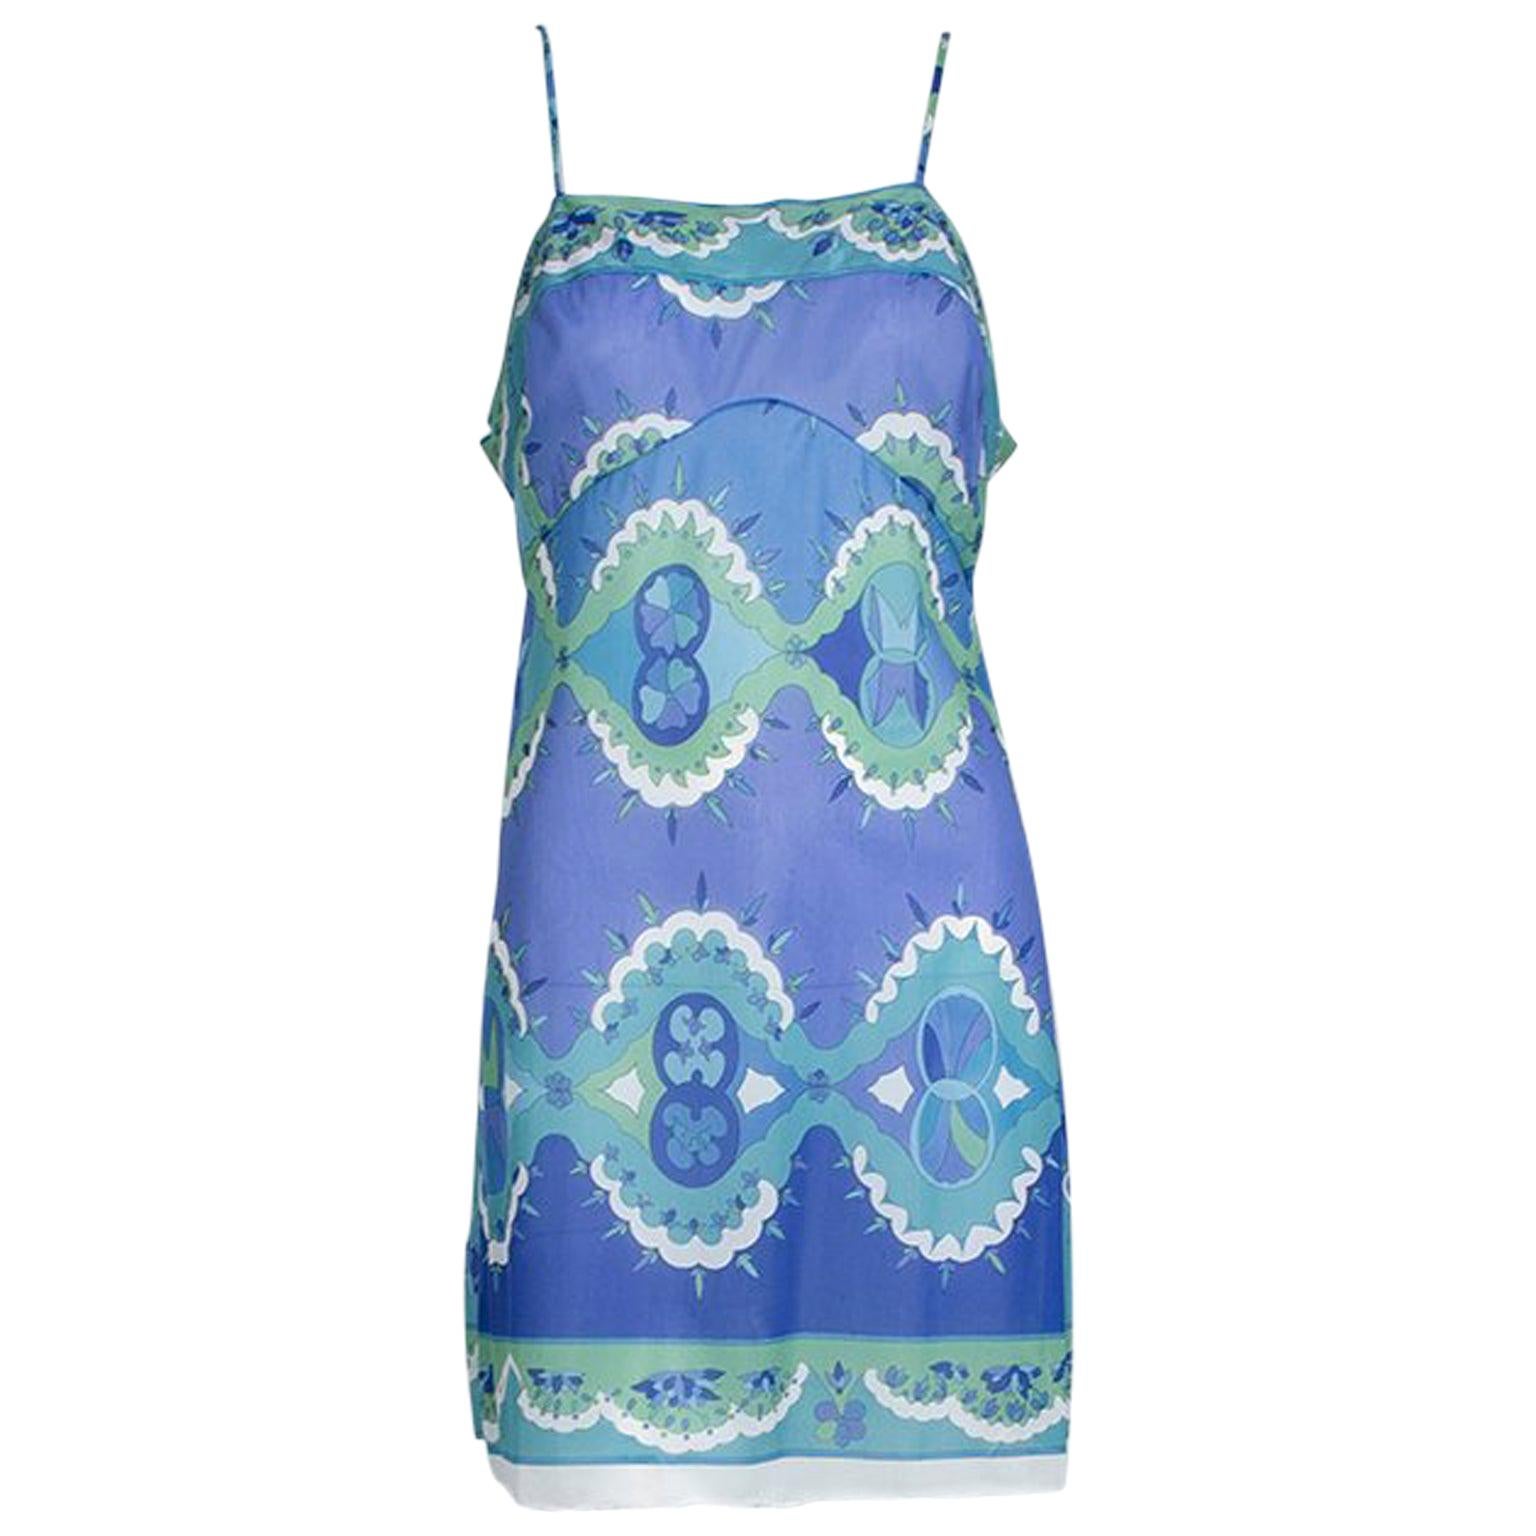 Emilio Pucci Formfit Rogers Blue Palette Negligée Slip Mini Dress - Small, 1960s